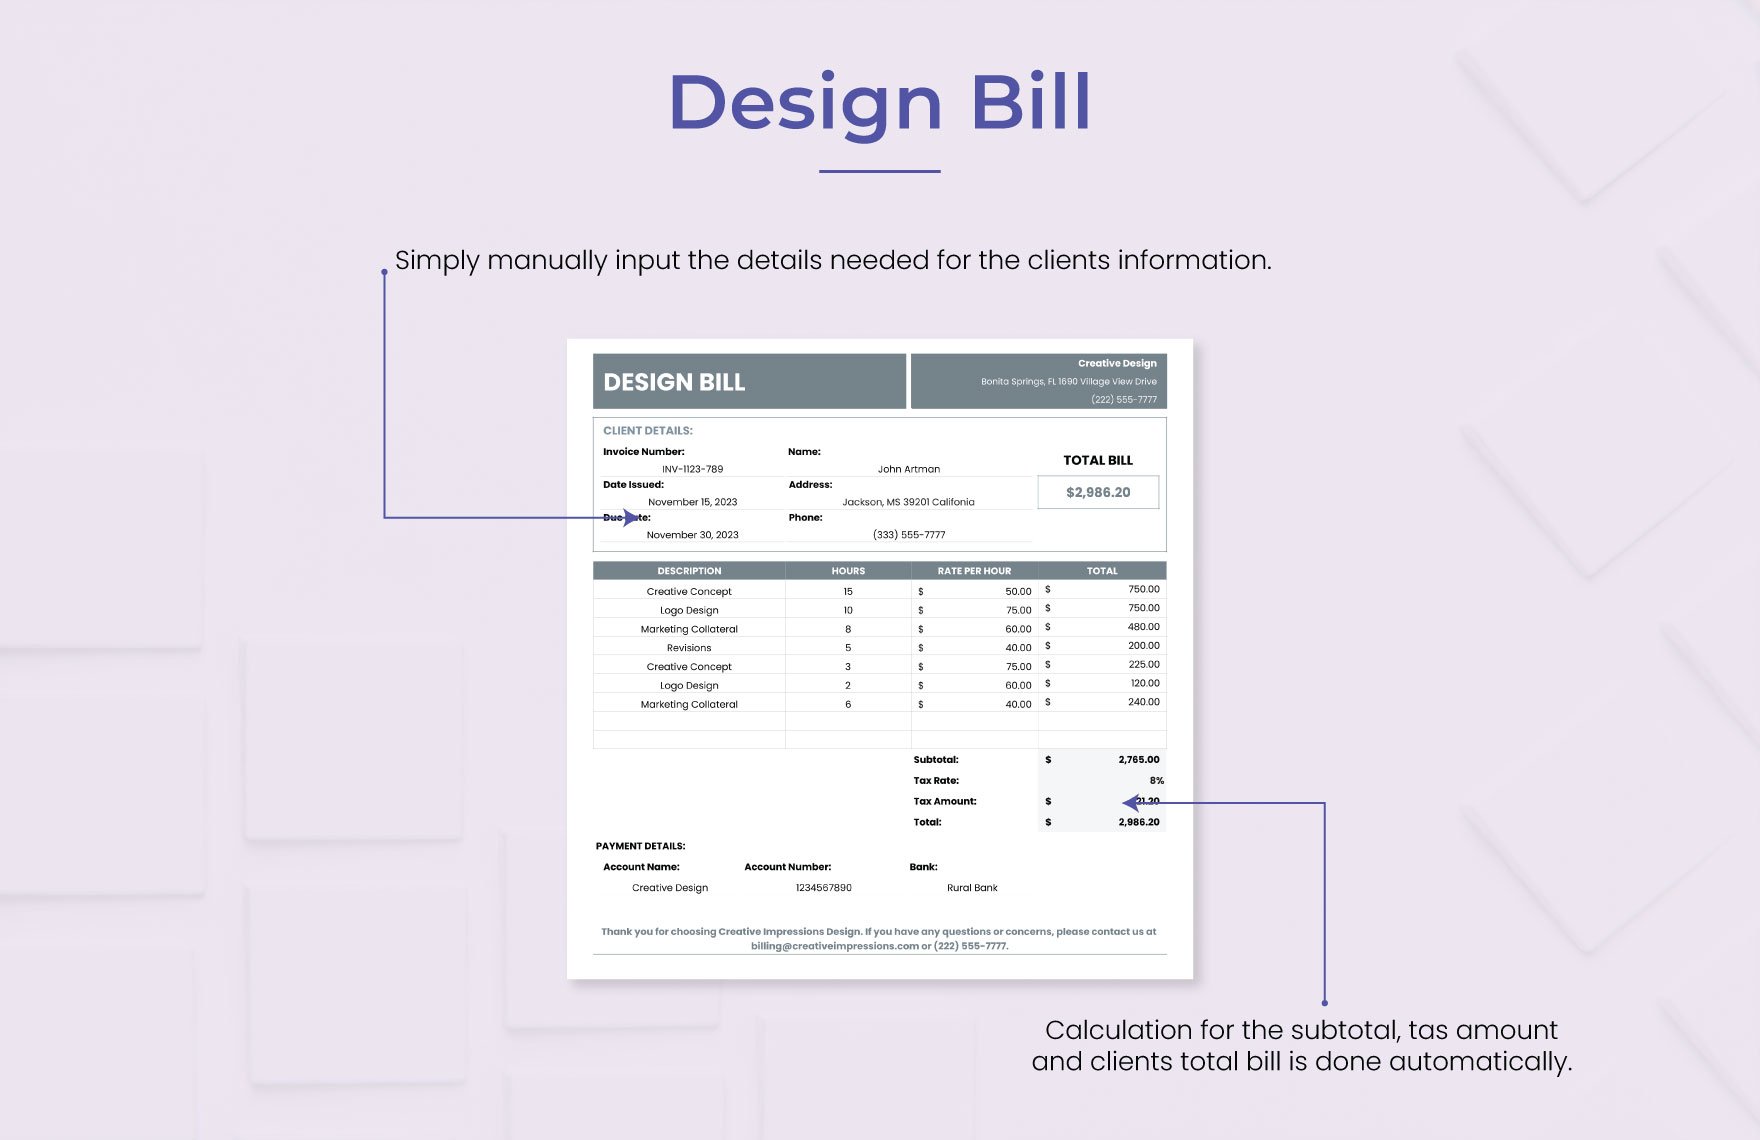 Design Bill Template